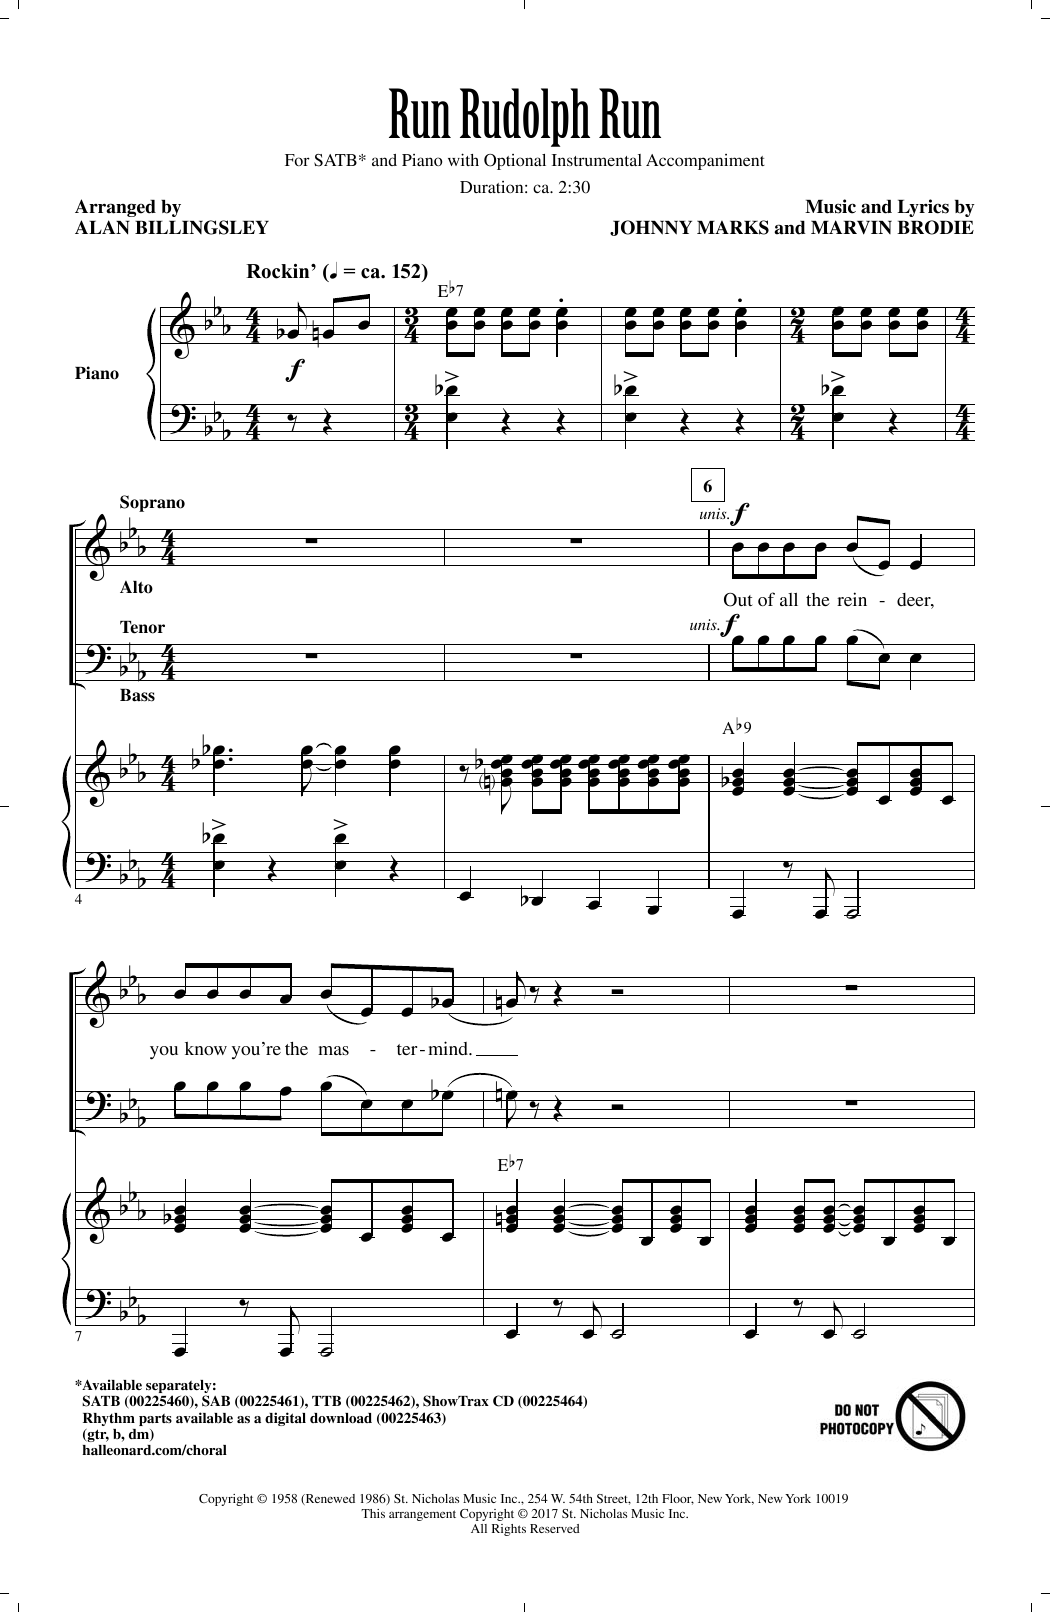 Alan Billingsley Run Rudolph Run Sheet Music Notes & Chords for SATB - Download or Print PDF